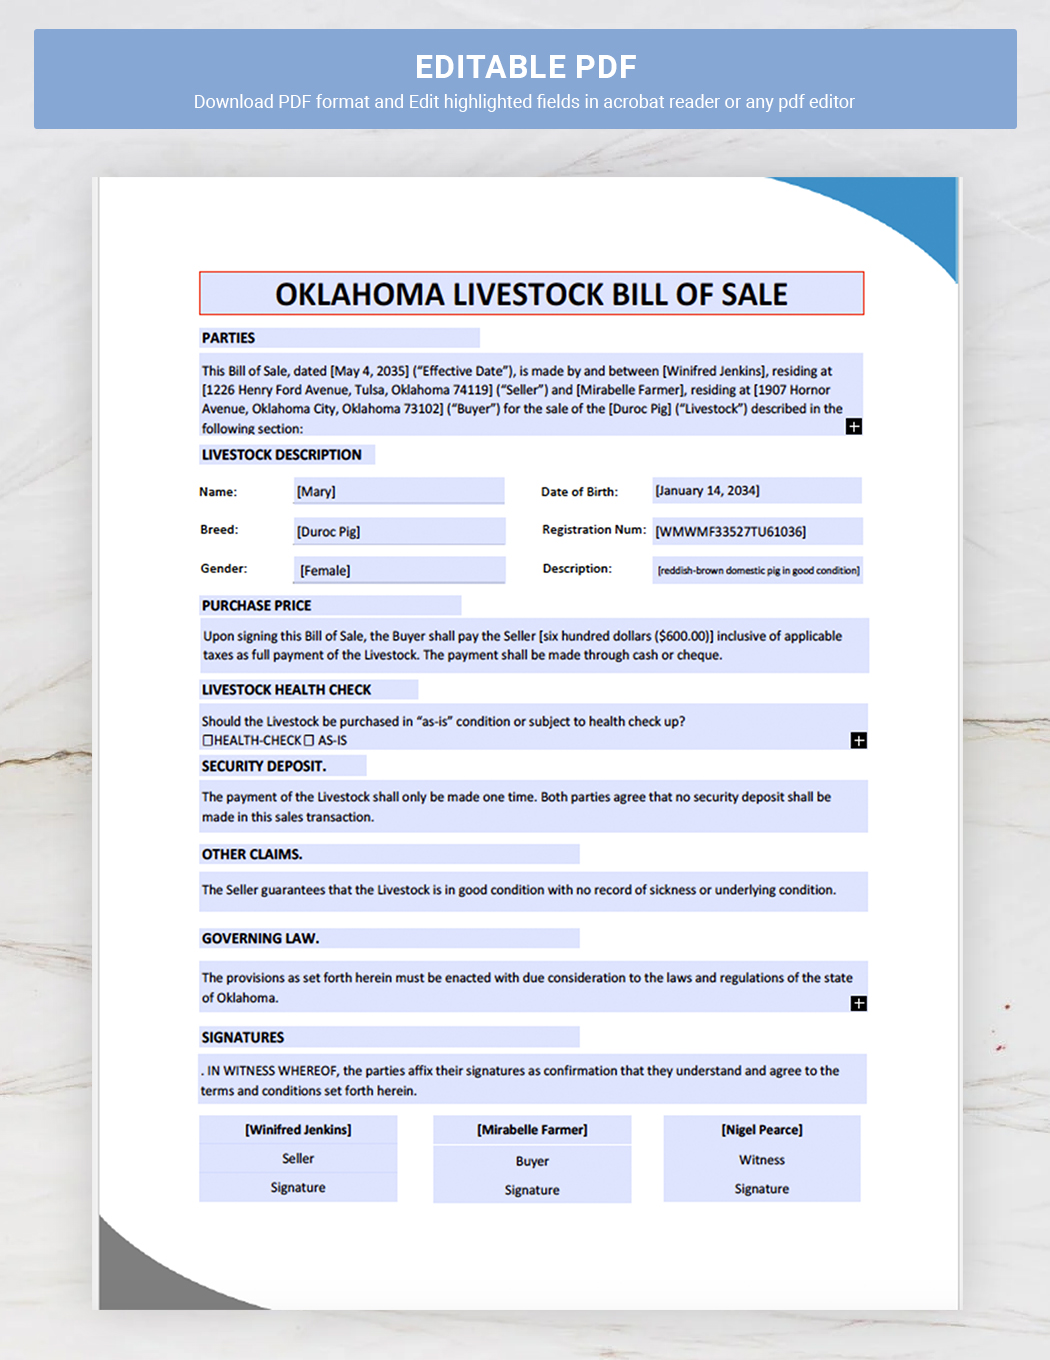 Oklahoma Livestock Bill of Sale Template